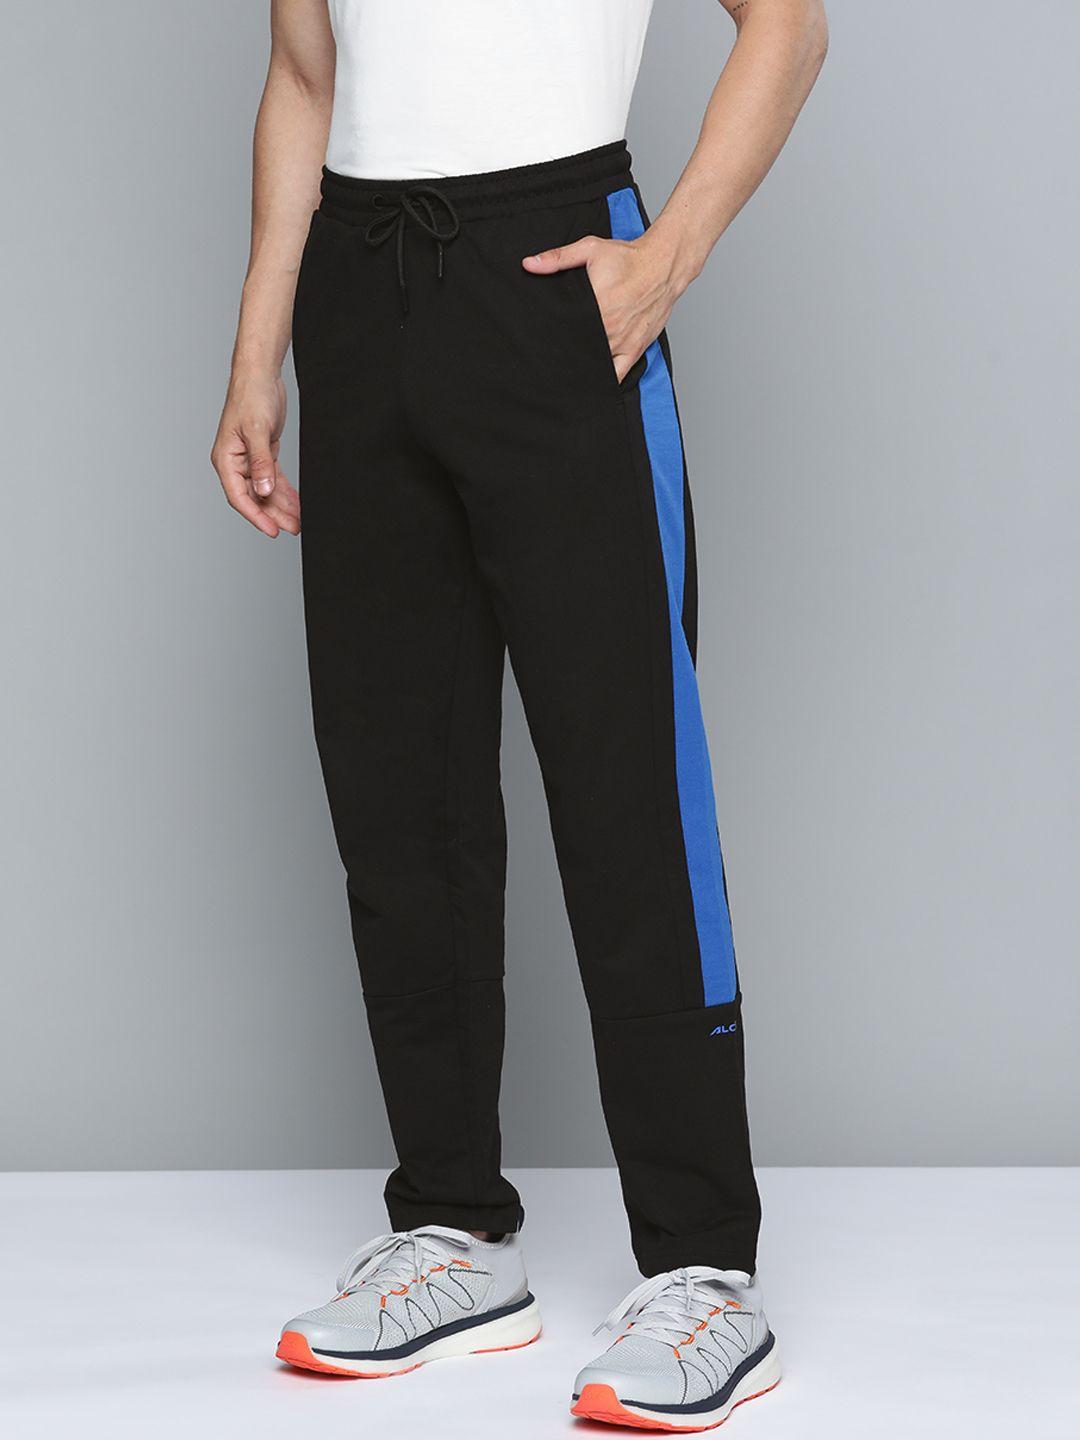 alcis men black & blue colourblocked track pants